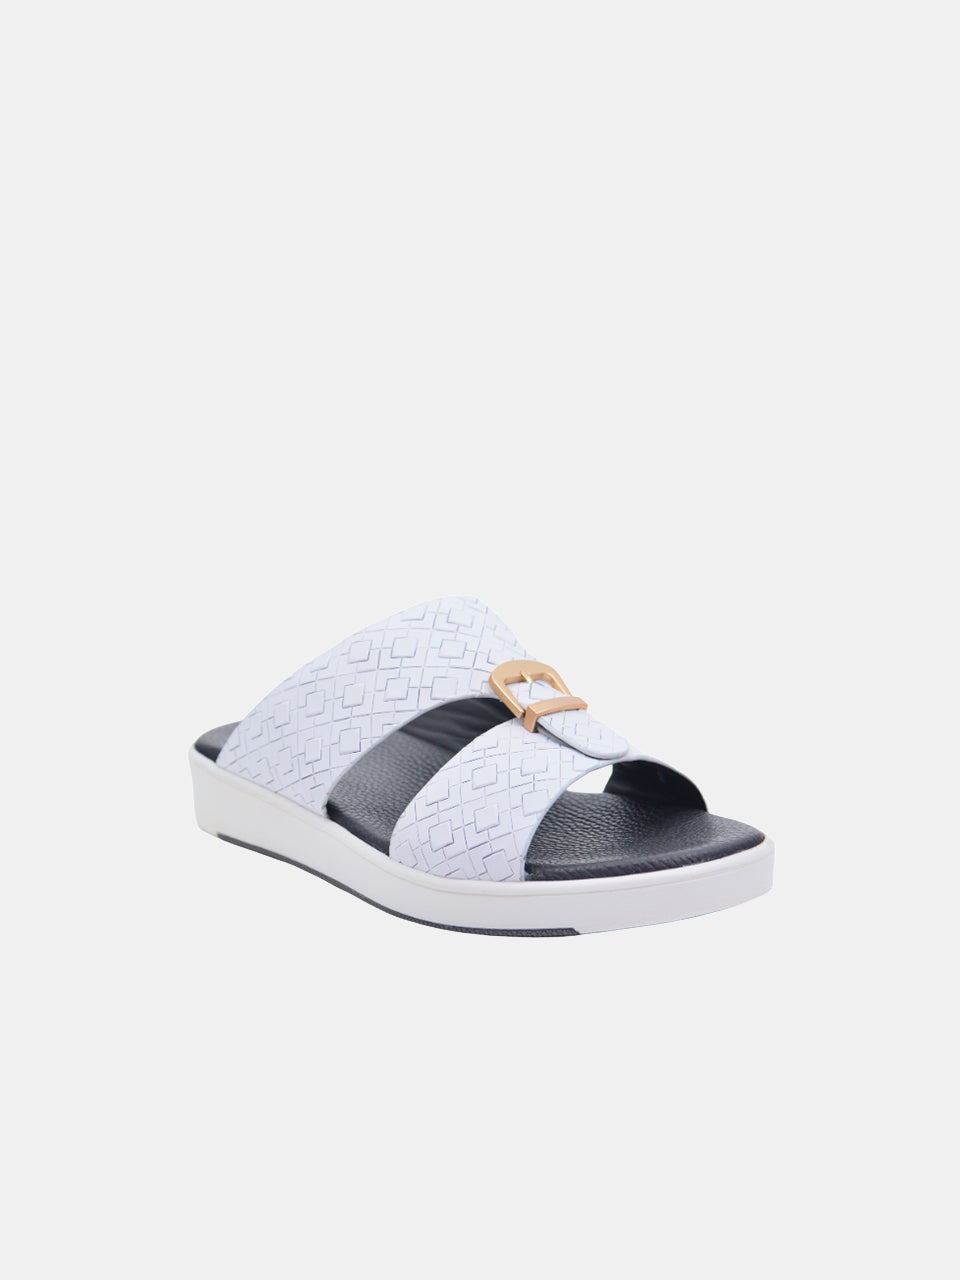 Barjeel Uno SP1-030 Men's Lattice Arabic Sandals #color_White